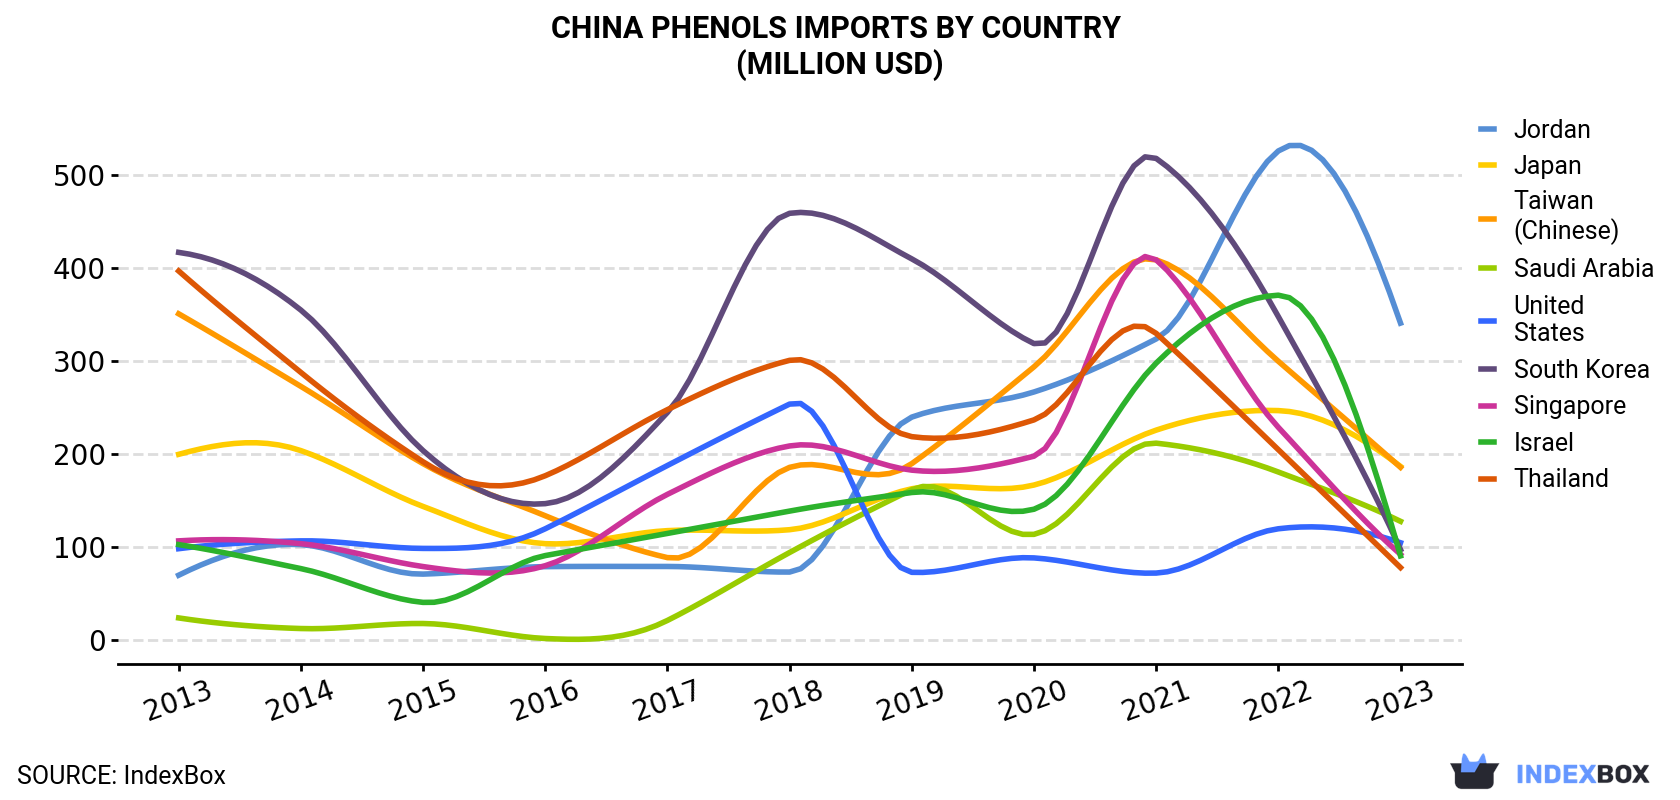 China Phenols Imports By Country (Million USD)